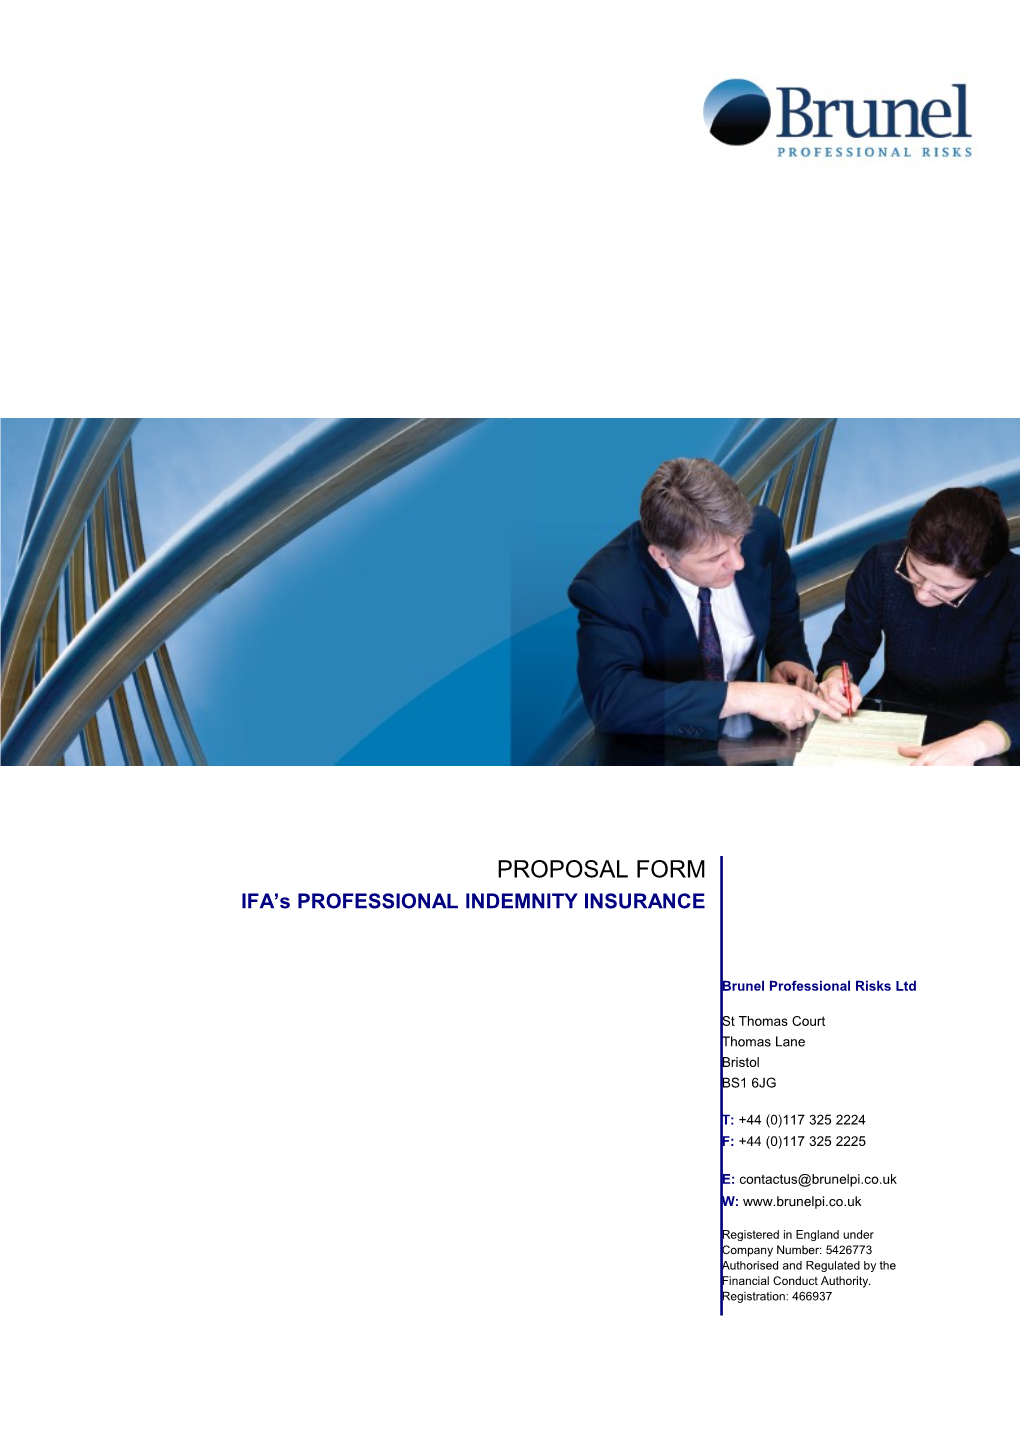 IFA Proposal Form